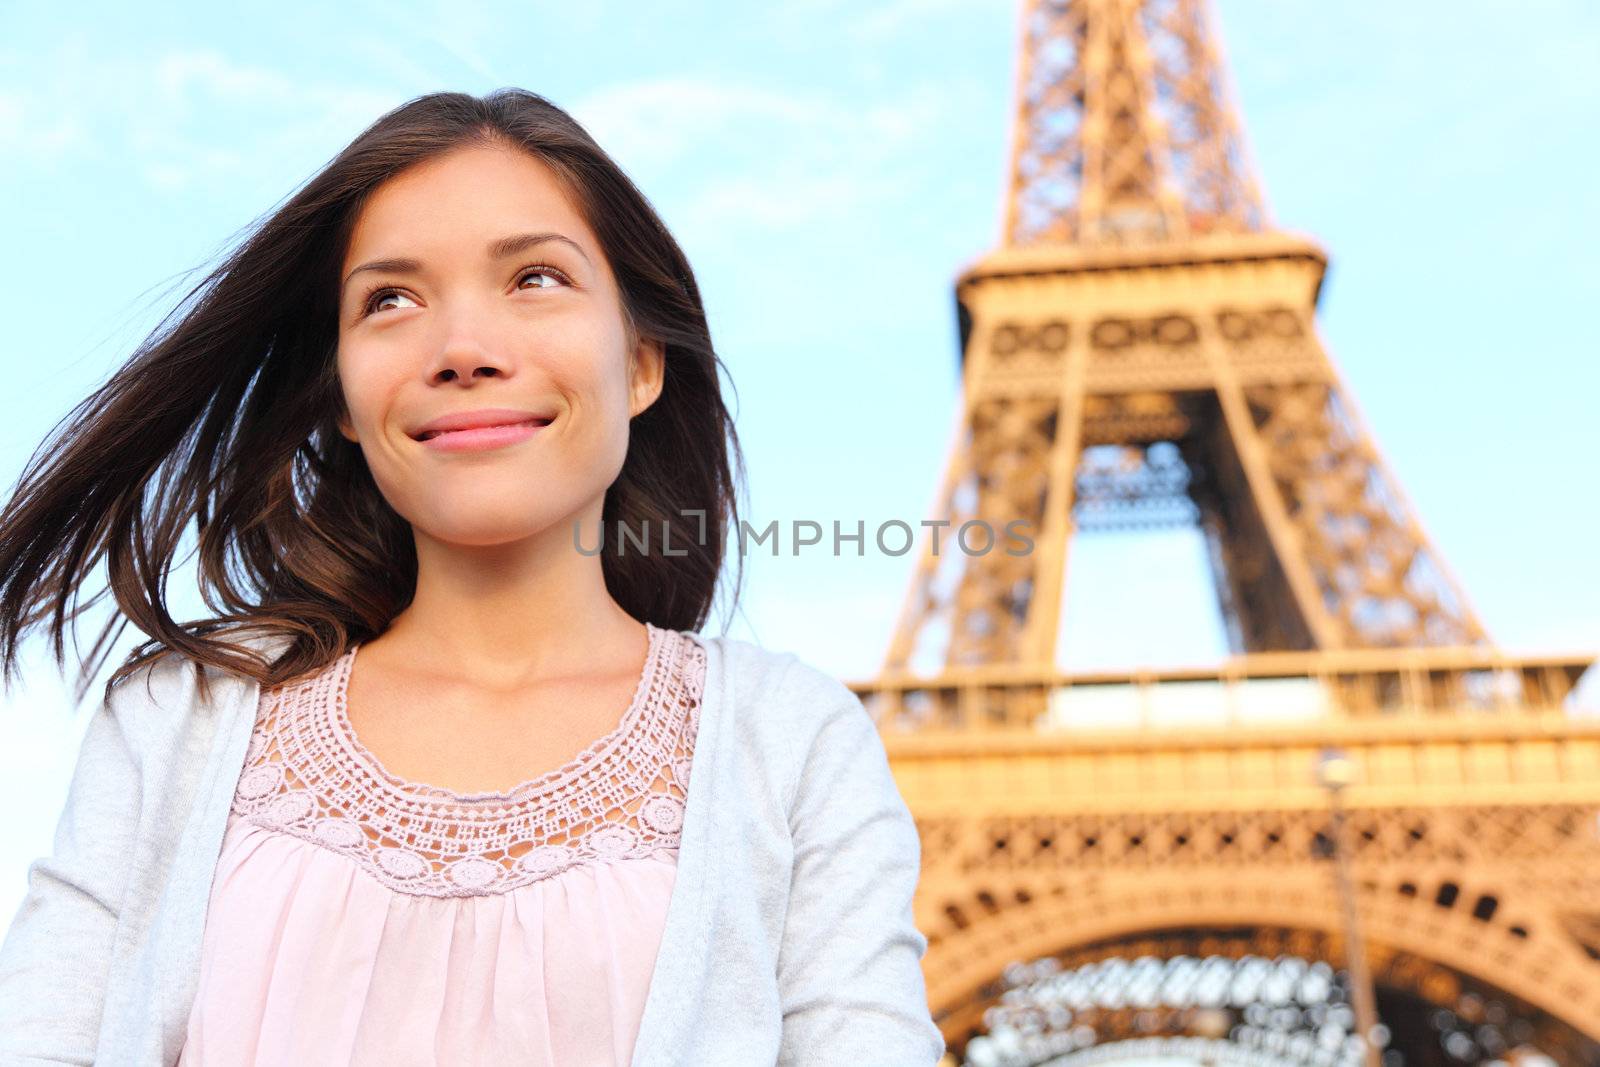 Eiffel tower Paris tourist woman by Ariwasabi